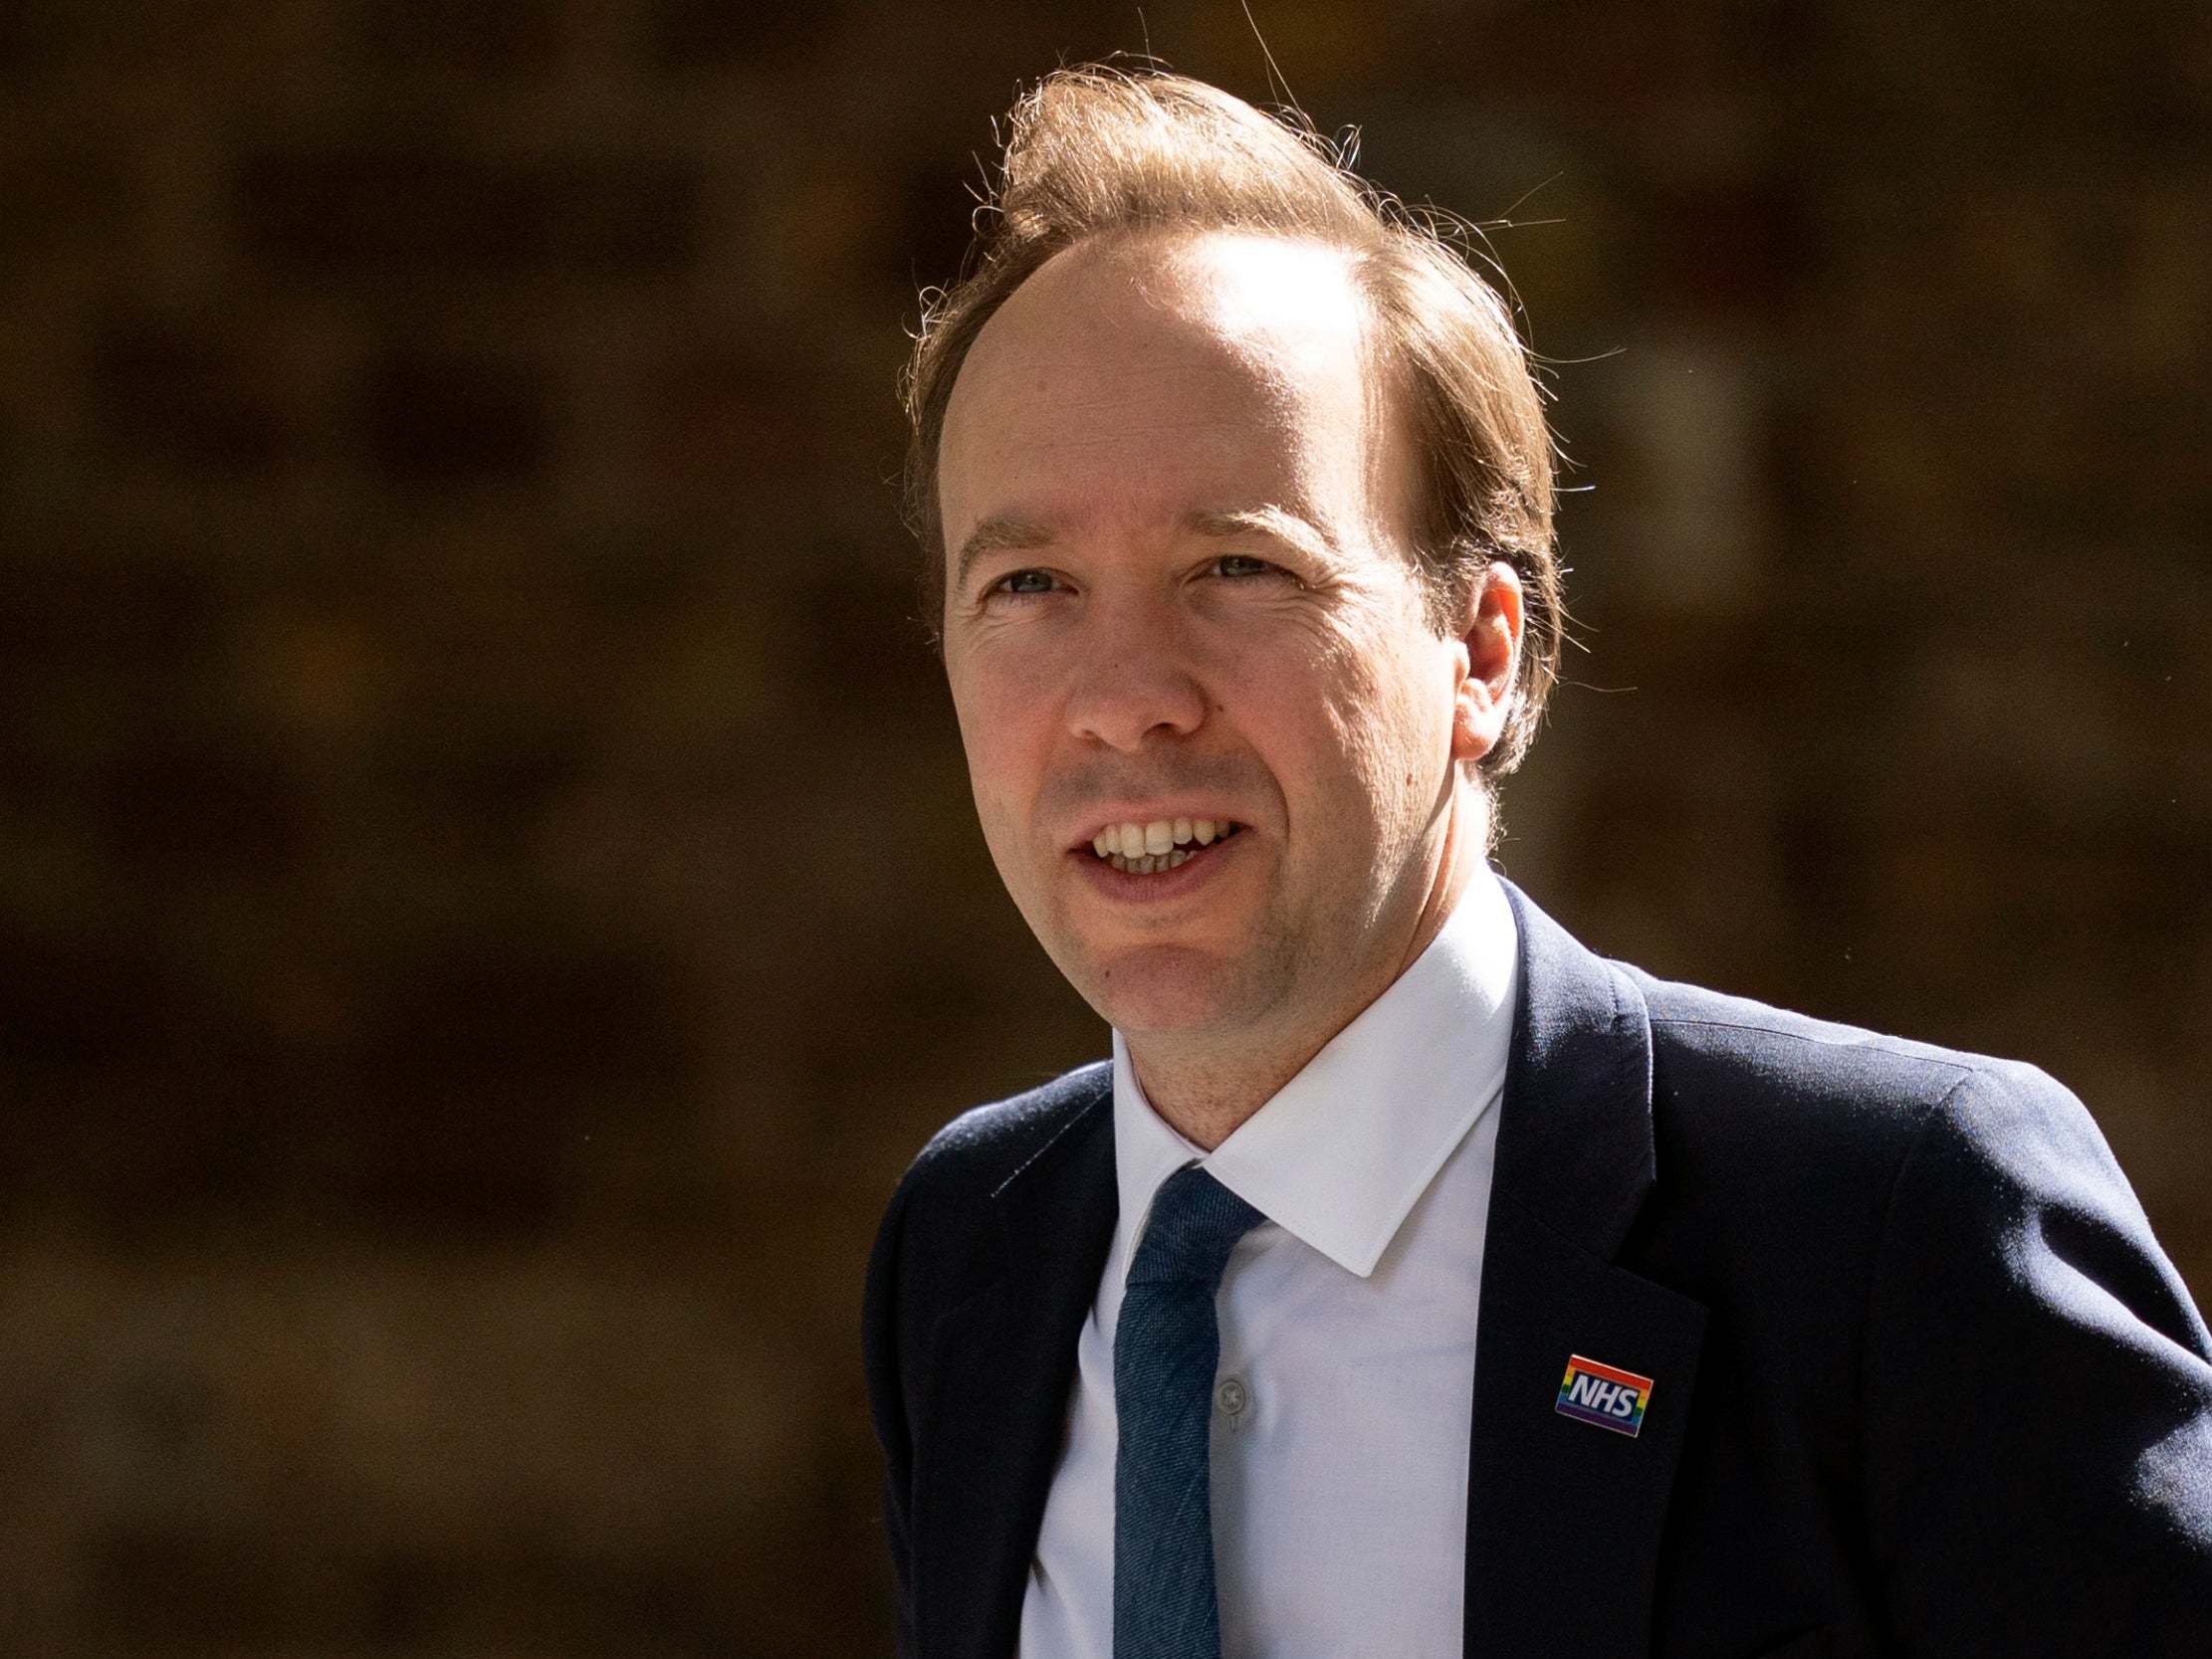 Health secretary Matt Hancock arrives at Downing Street on 1 July